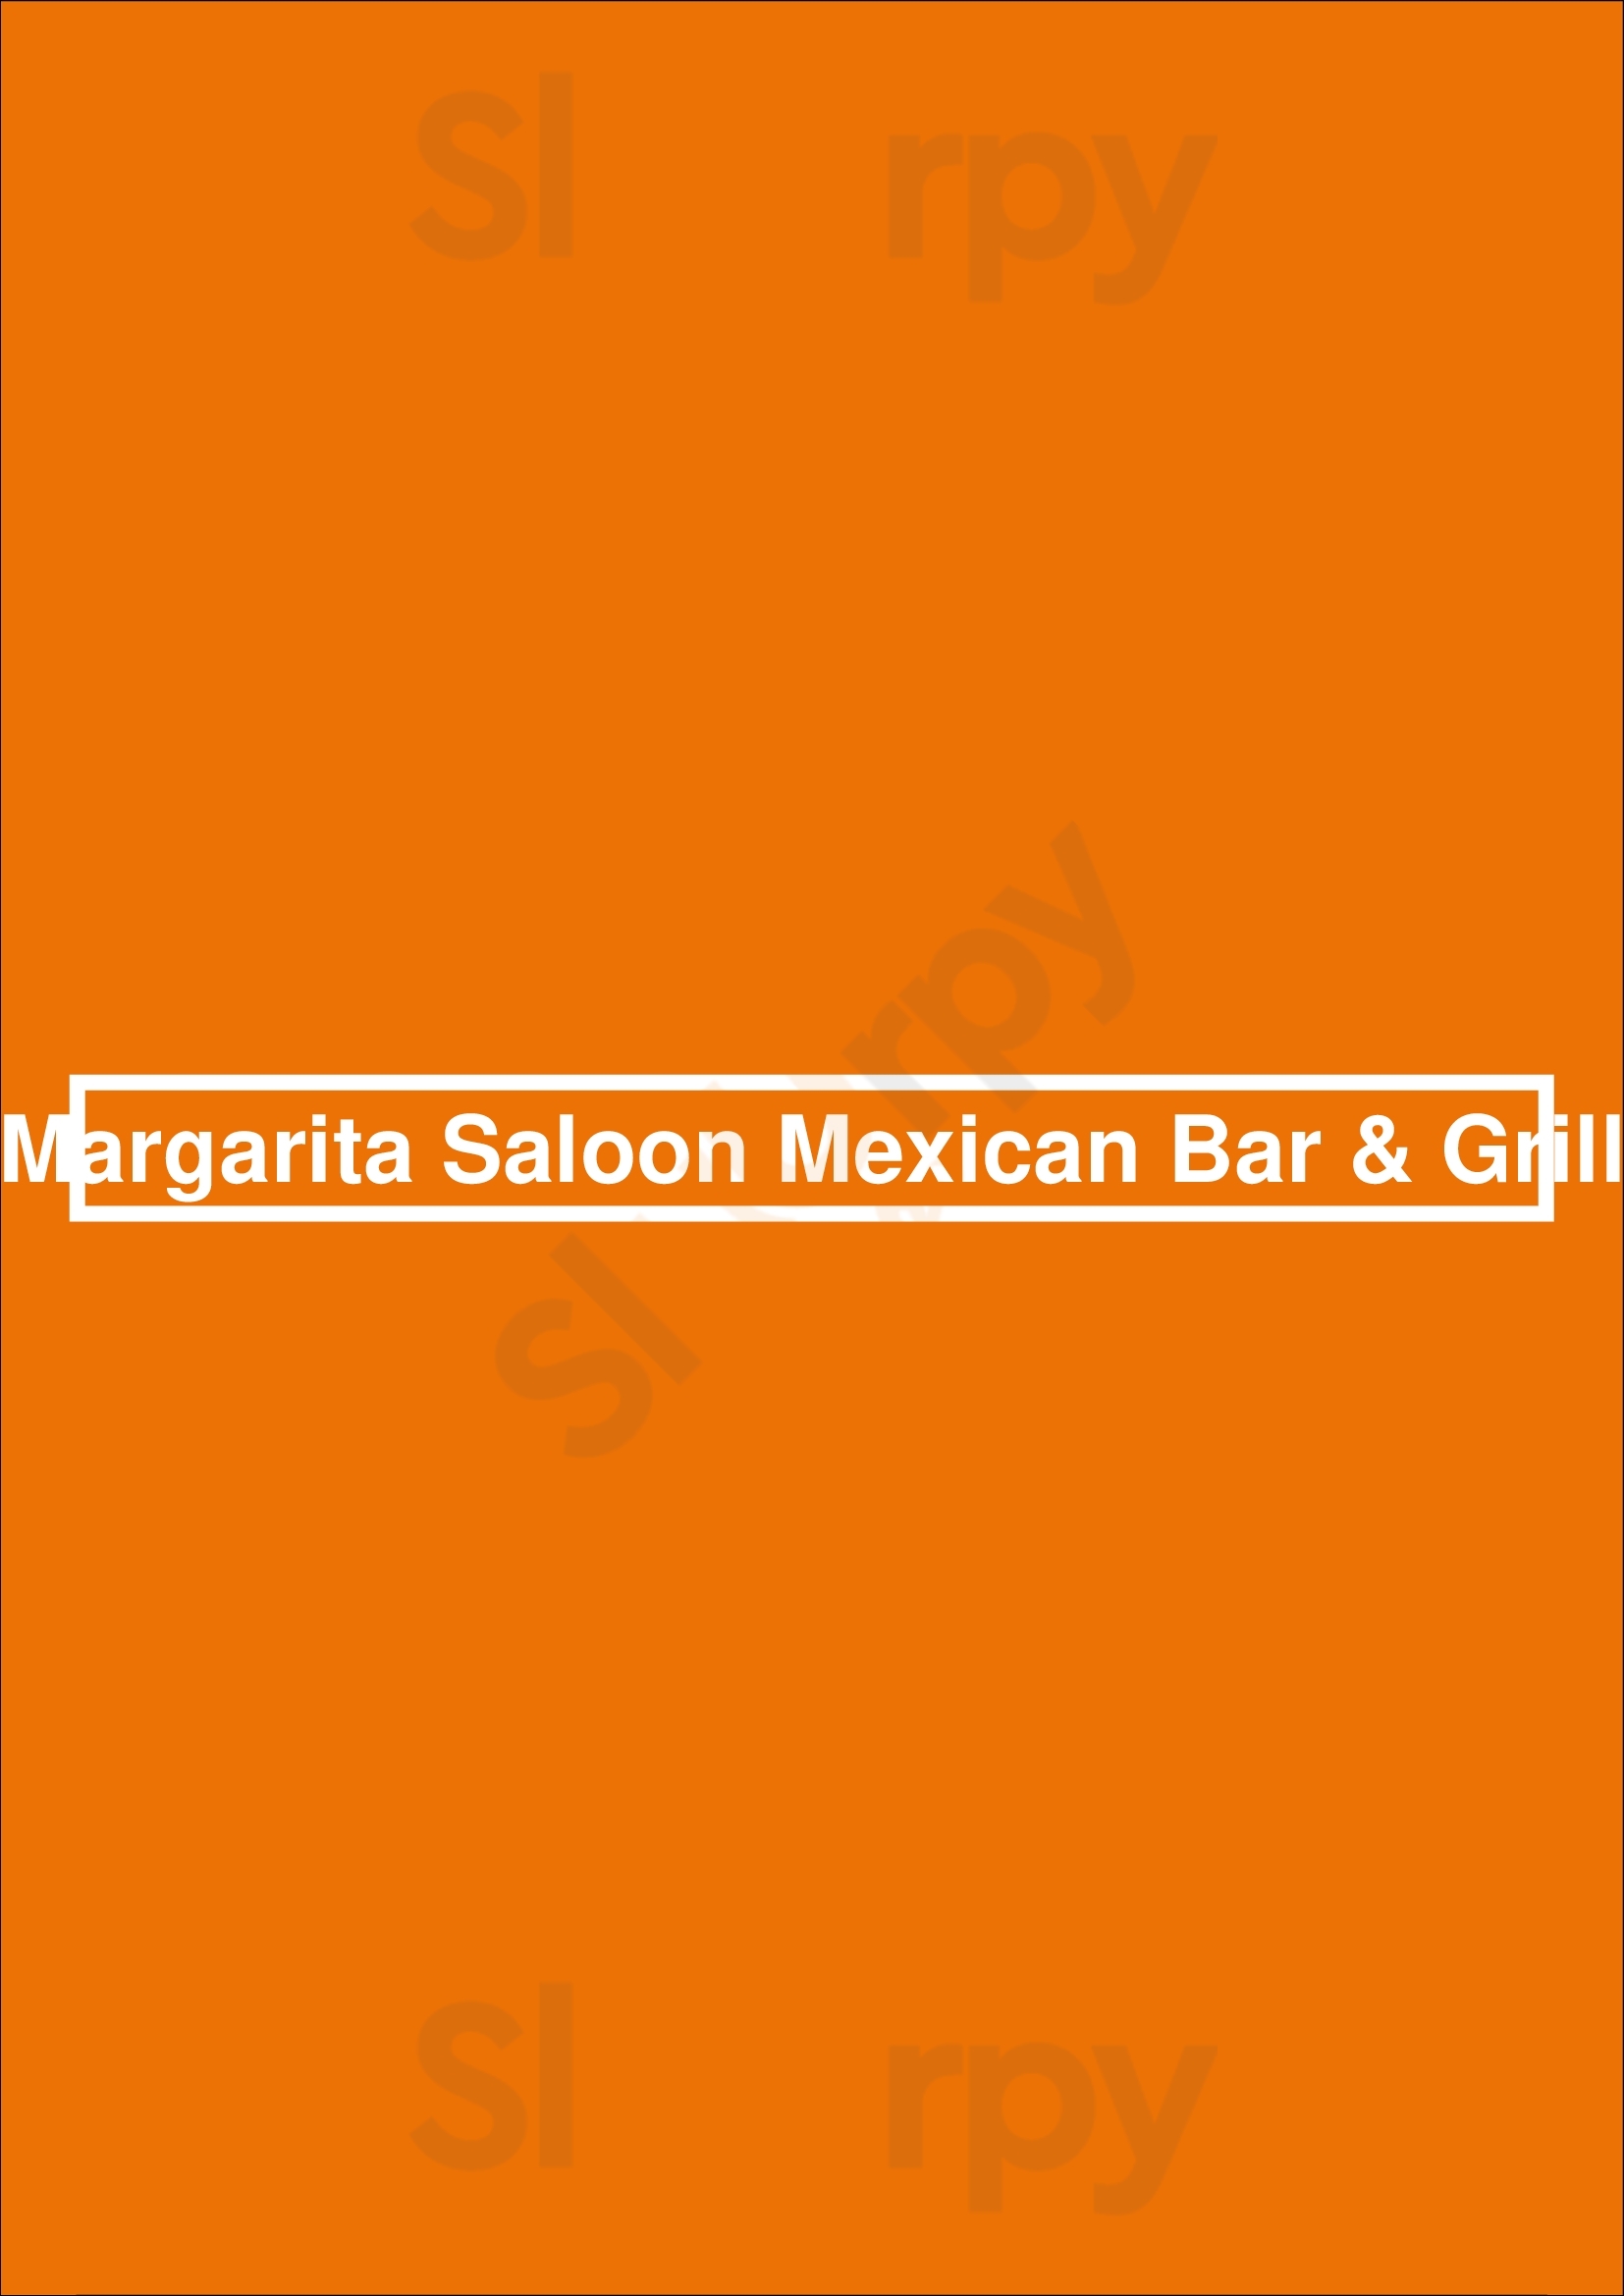 Margarita Saloon Mexican Bar & Grill New York City Menu - 1